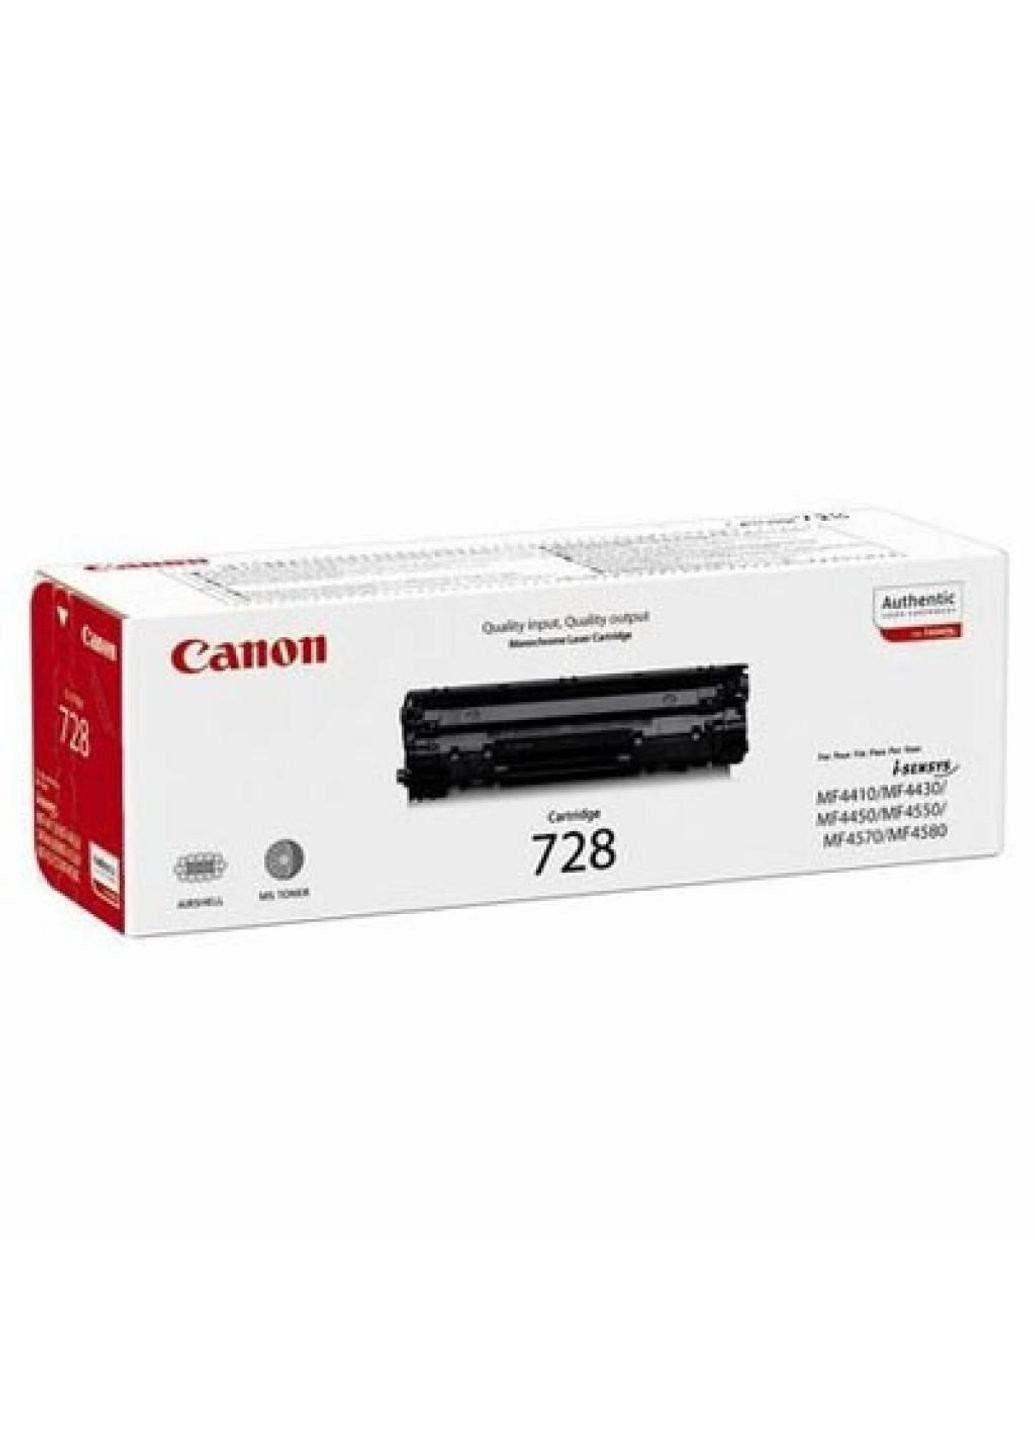 Картридж (3500B002) Canon 728 black mf45xx/mf44xx series (247618219)